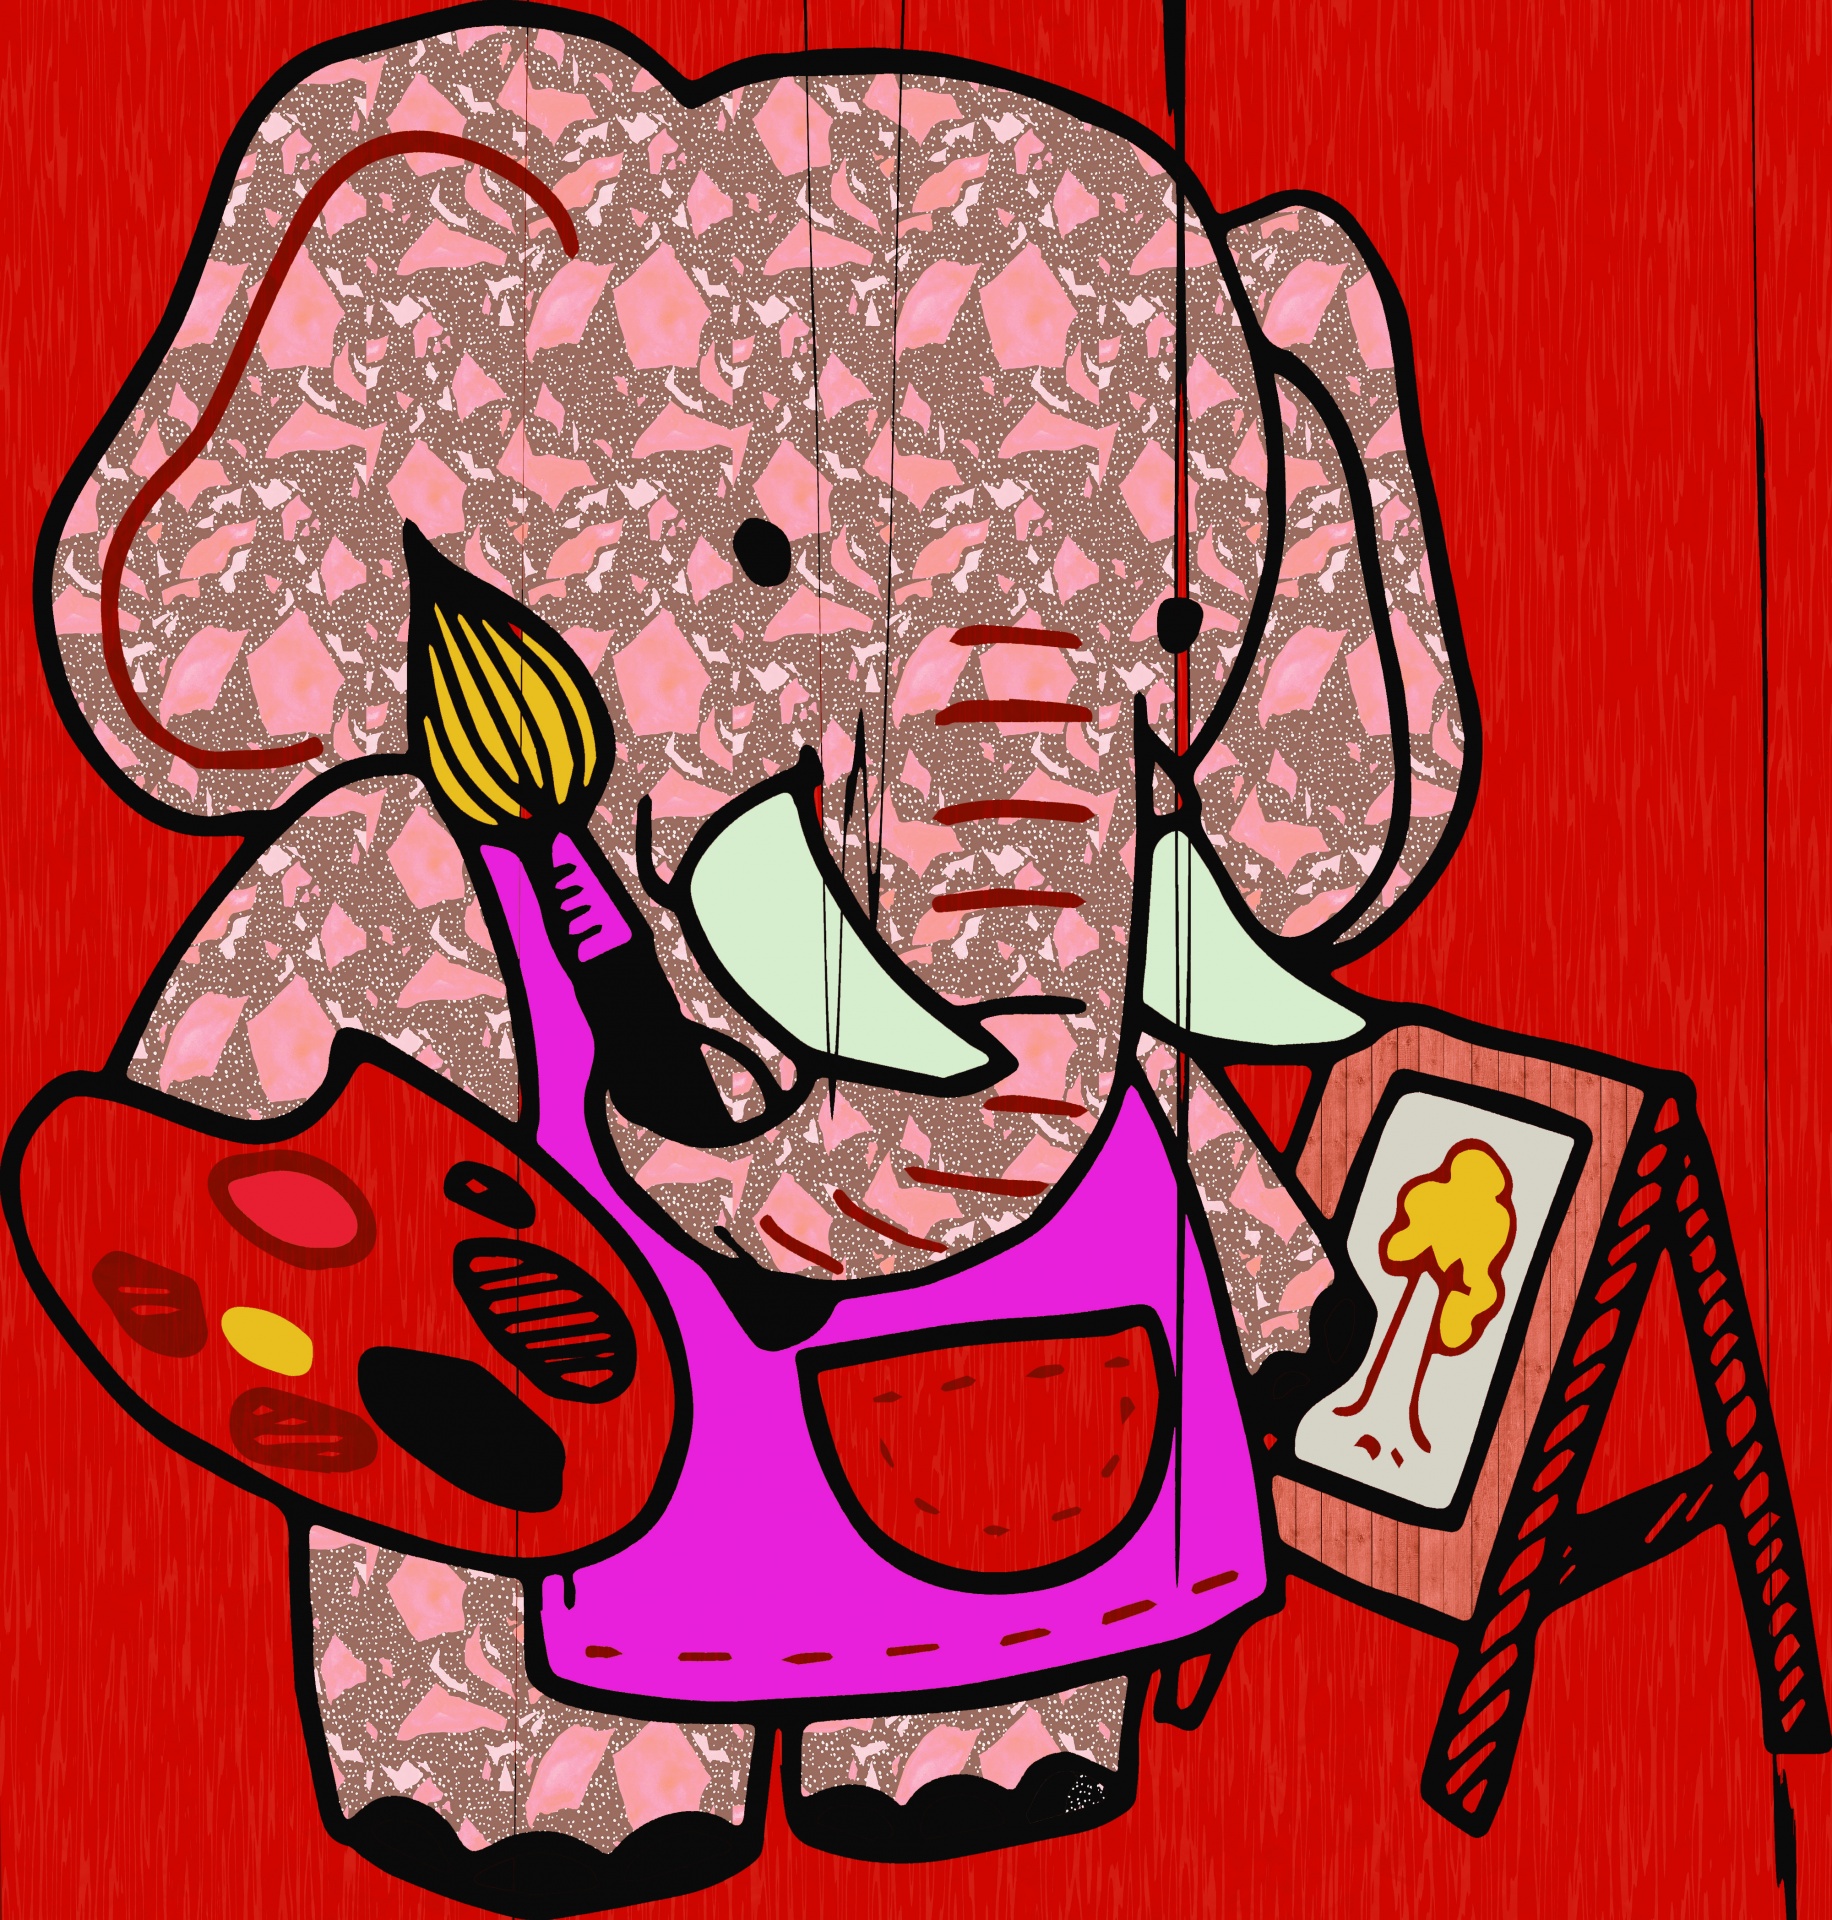 Elephant Painter Drawing